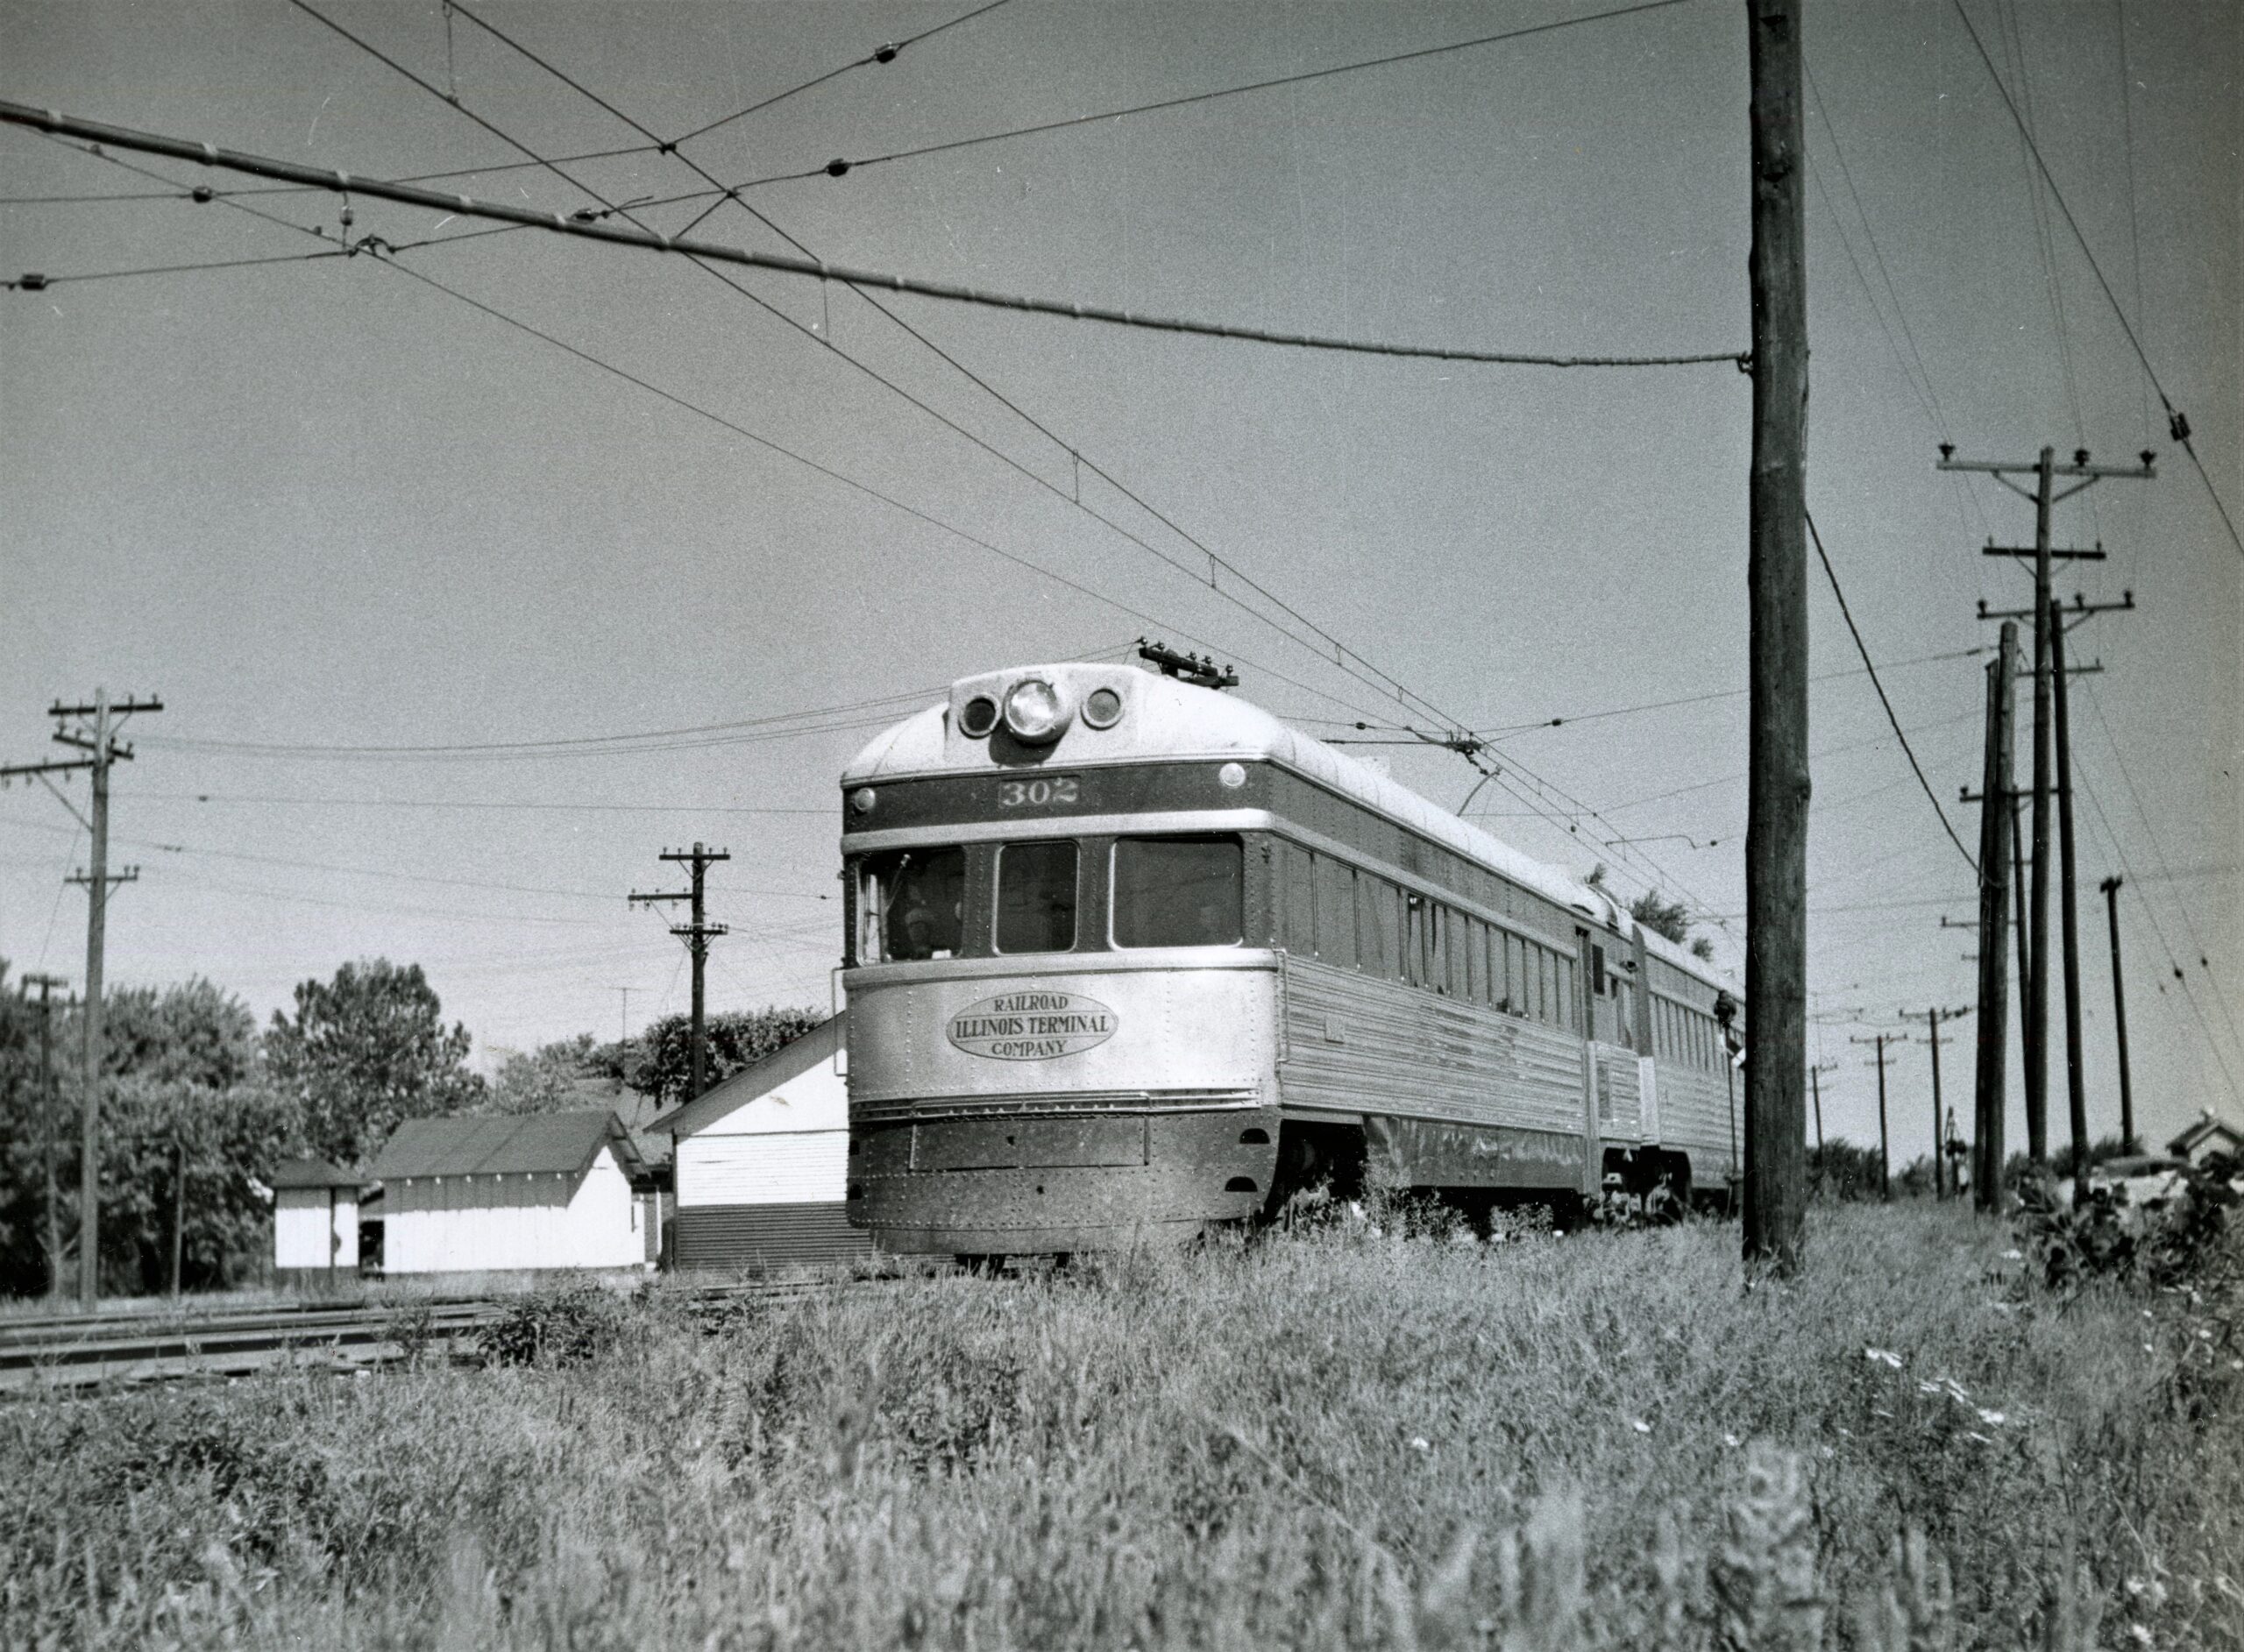 Illinois Terminal | Benld, Illinois | Streamliner #302 | 1953 NRHS Convention | September 6, 1953 | Ara Mesrobian Photograph | NRHS Collection